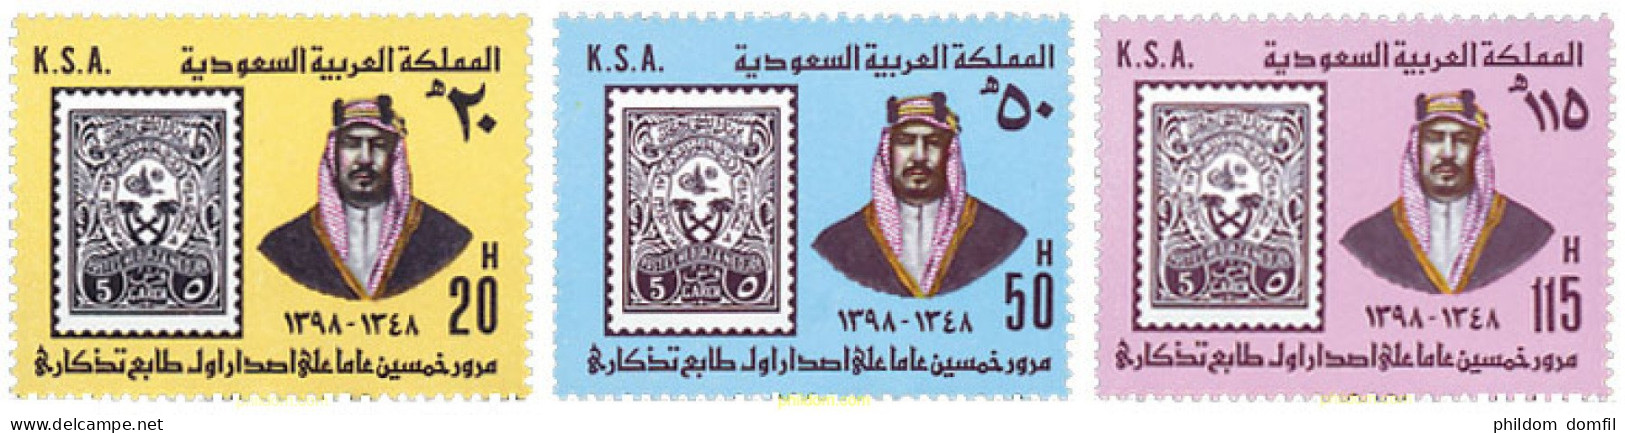 162063 MNH ARABIA SAUDITA 1979 DIA DEL SELLO - Arabia Saudita